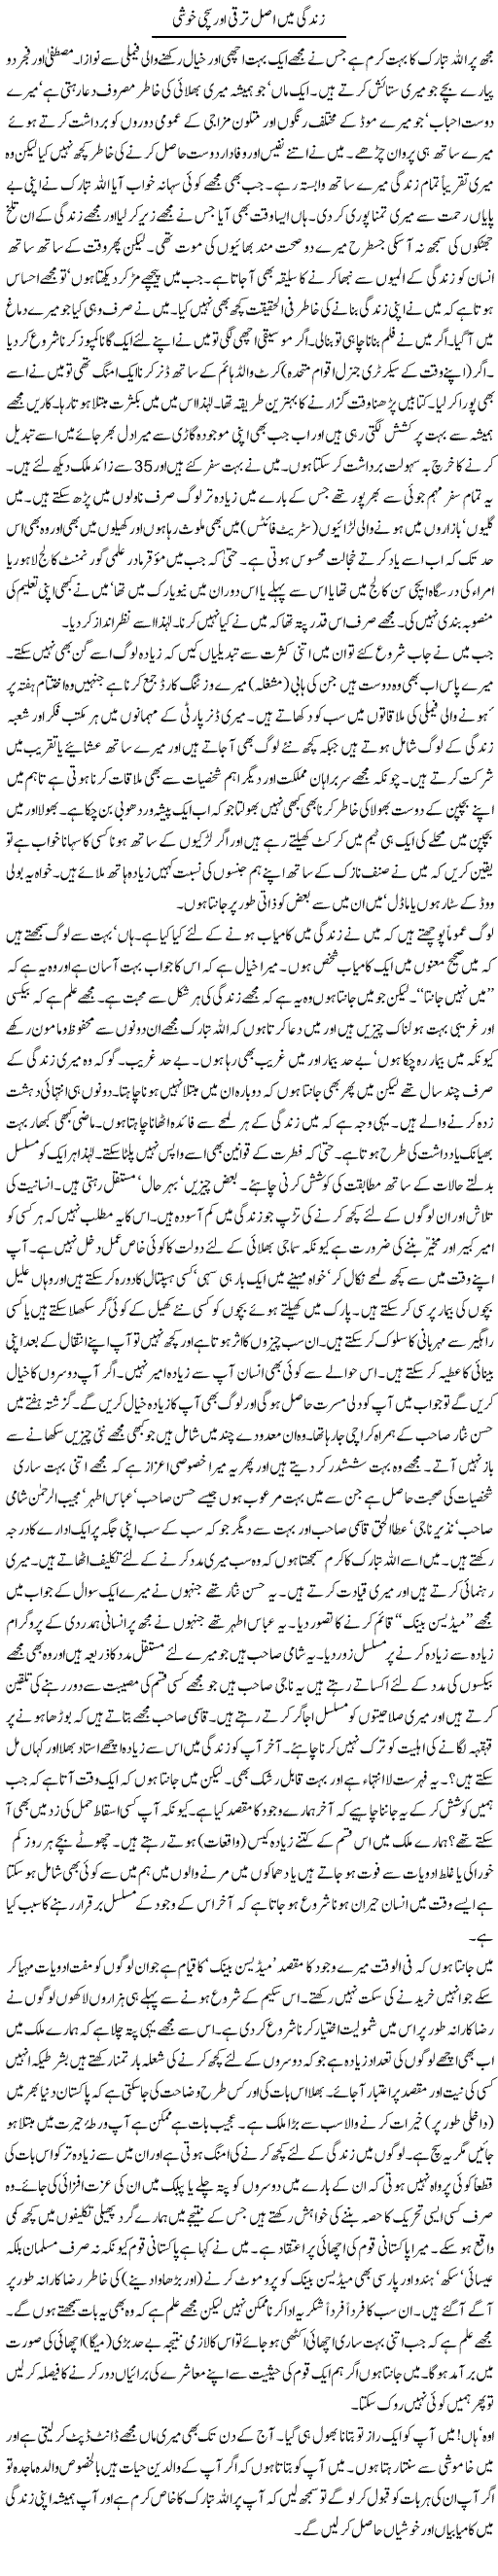 Asal taraqi aur khusi Express Column Mubashir Luqman 12 feb 2010